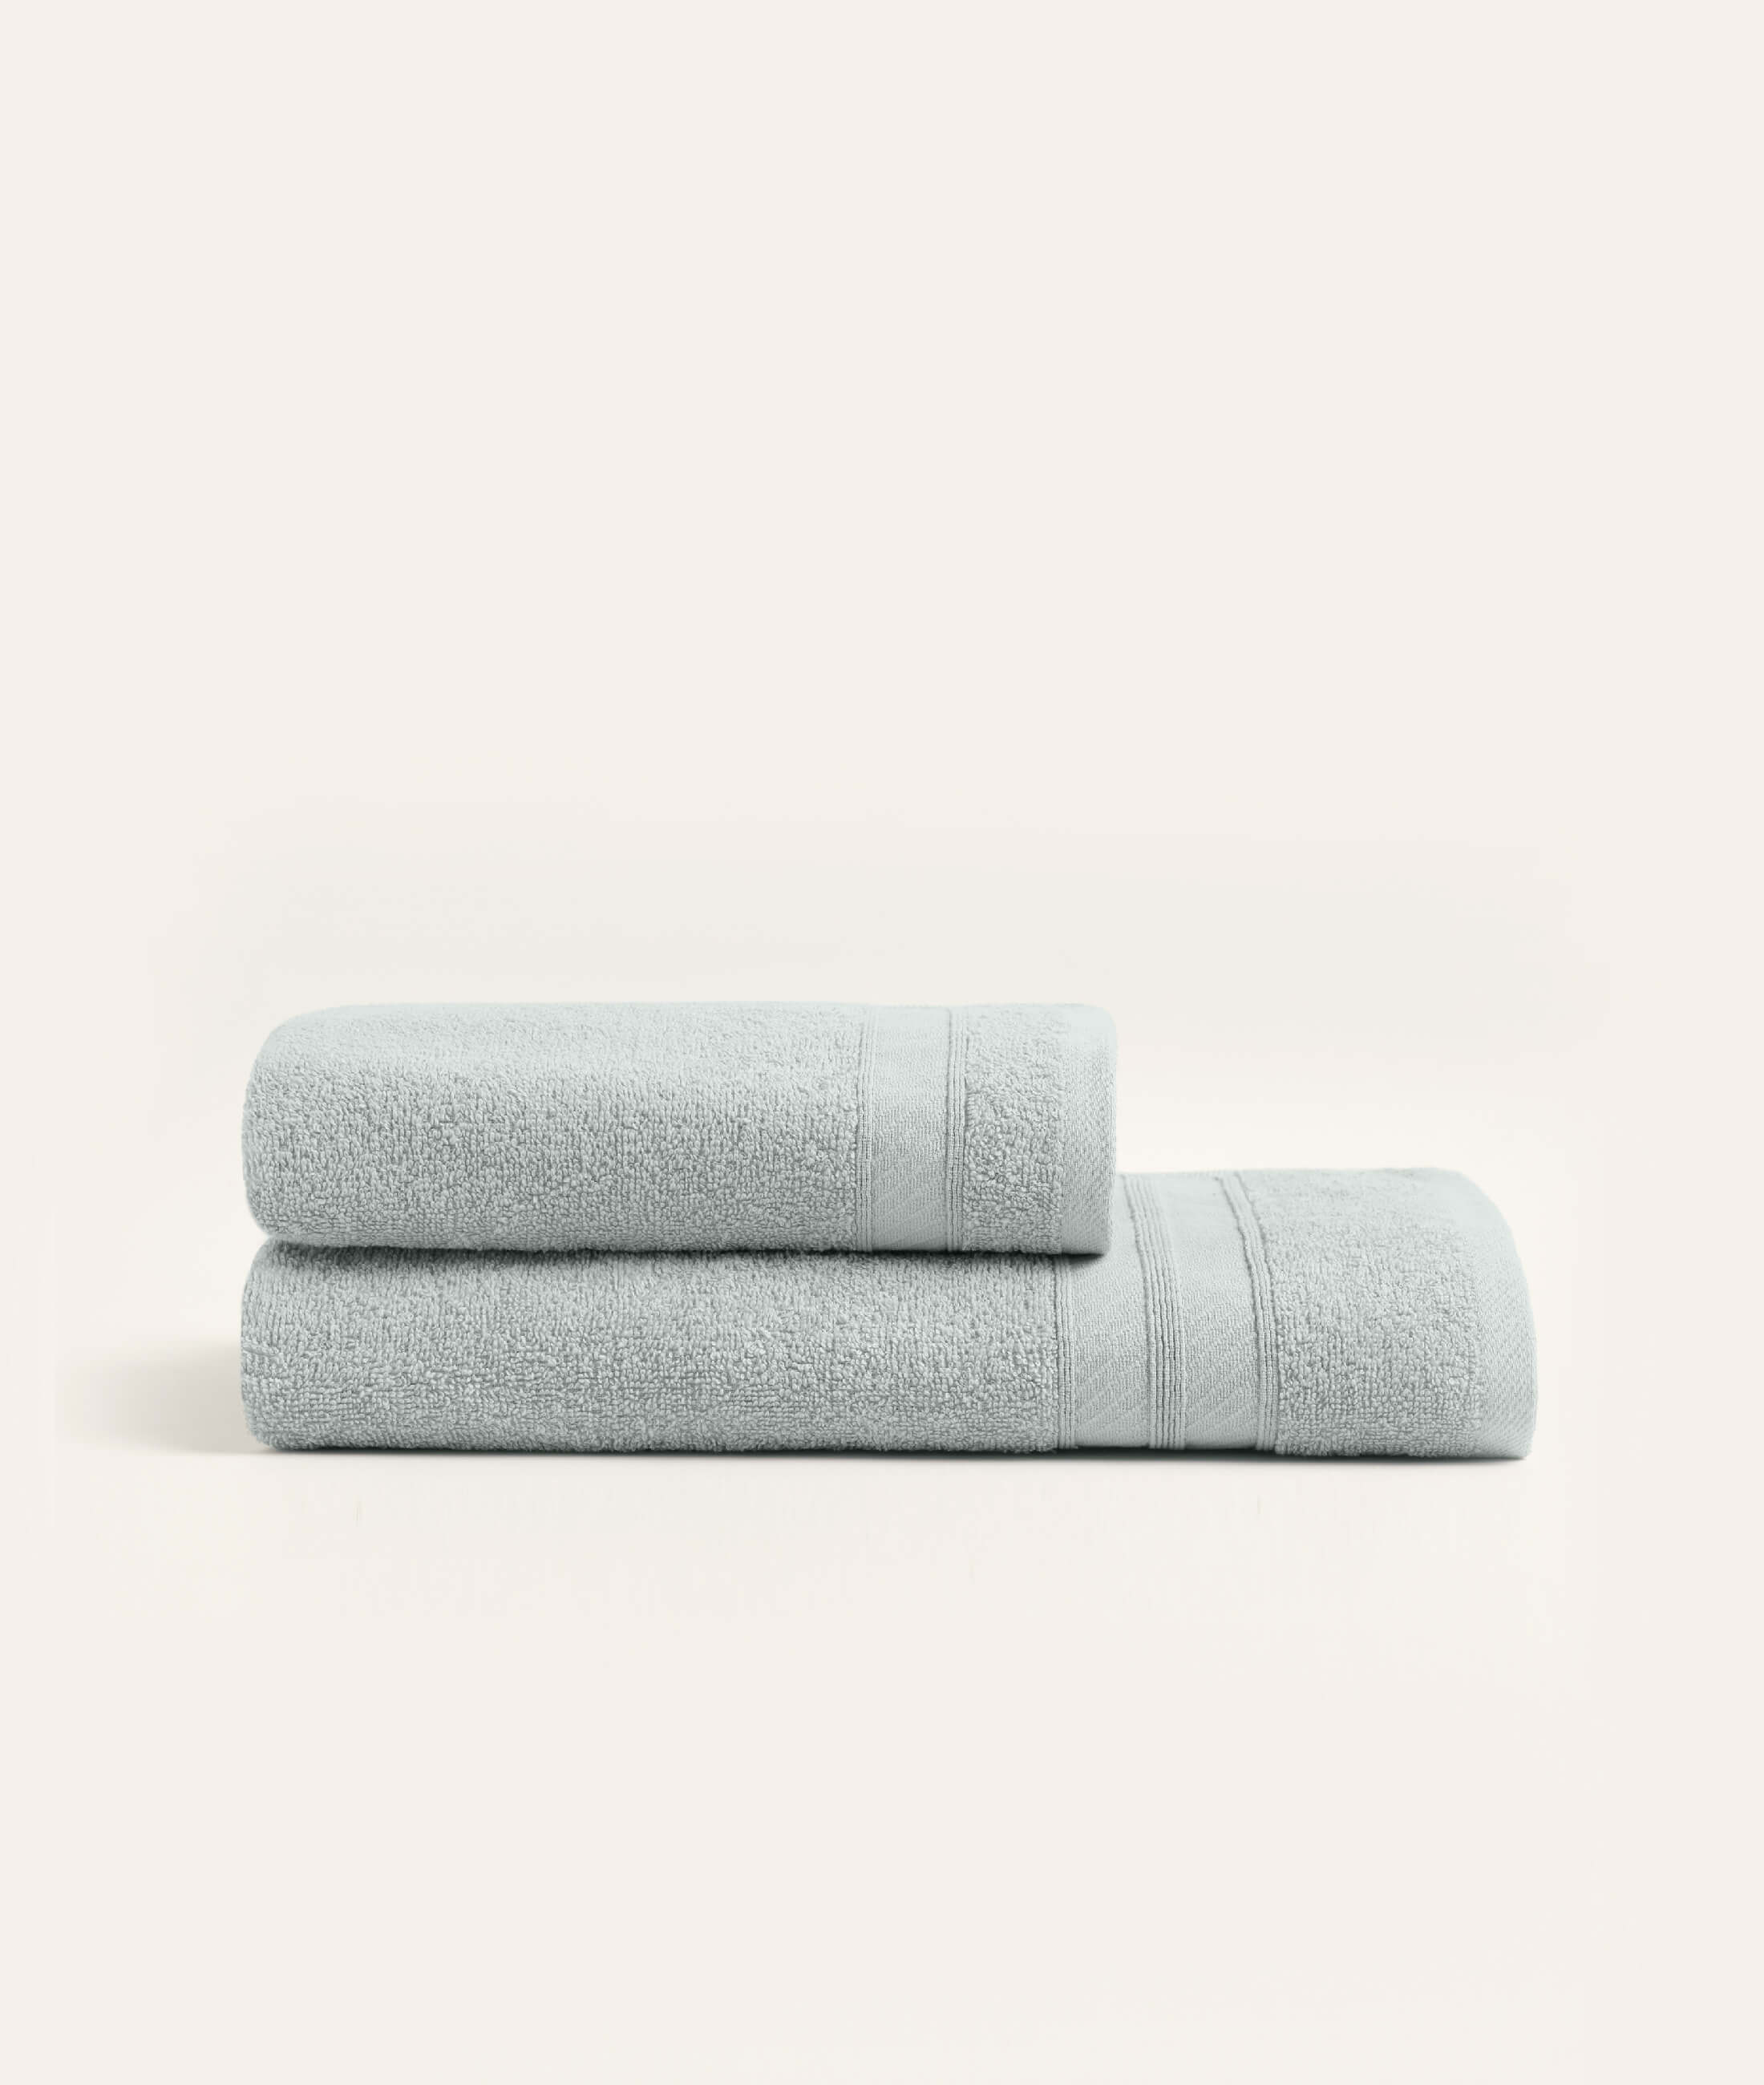 Lycian Border Gray 2 Towel Set 1006A